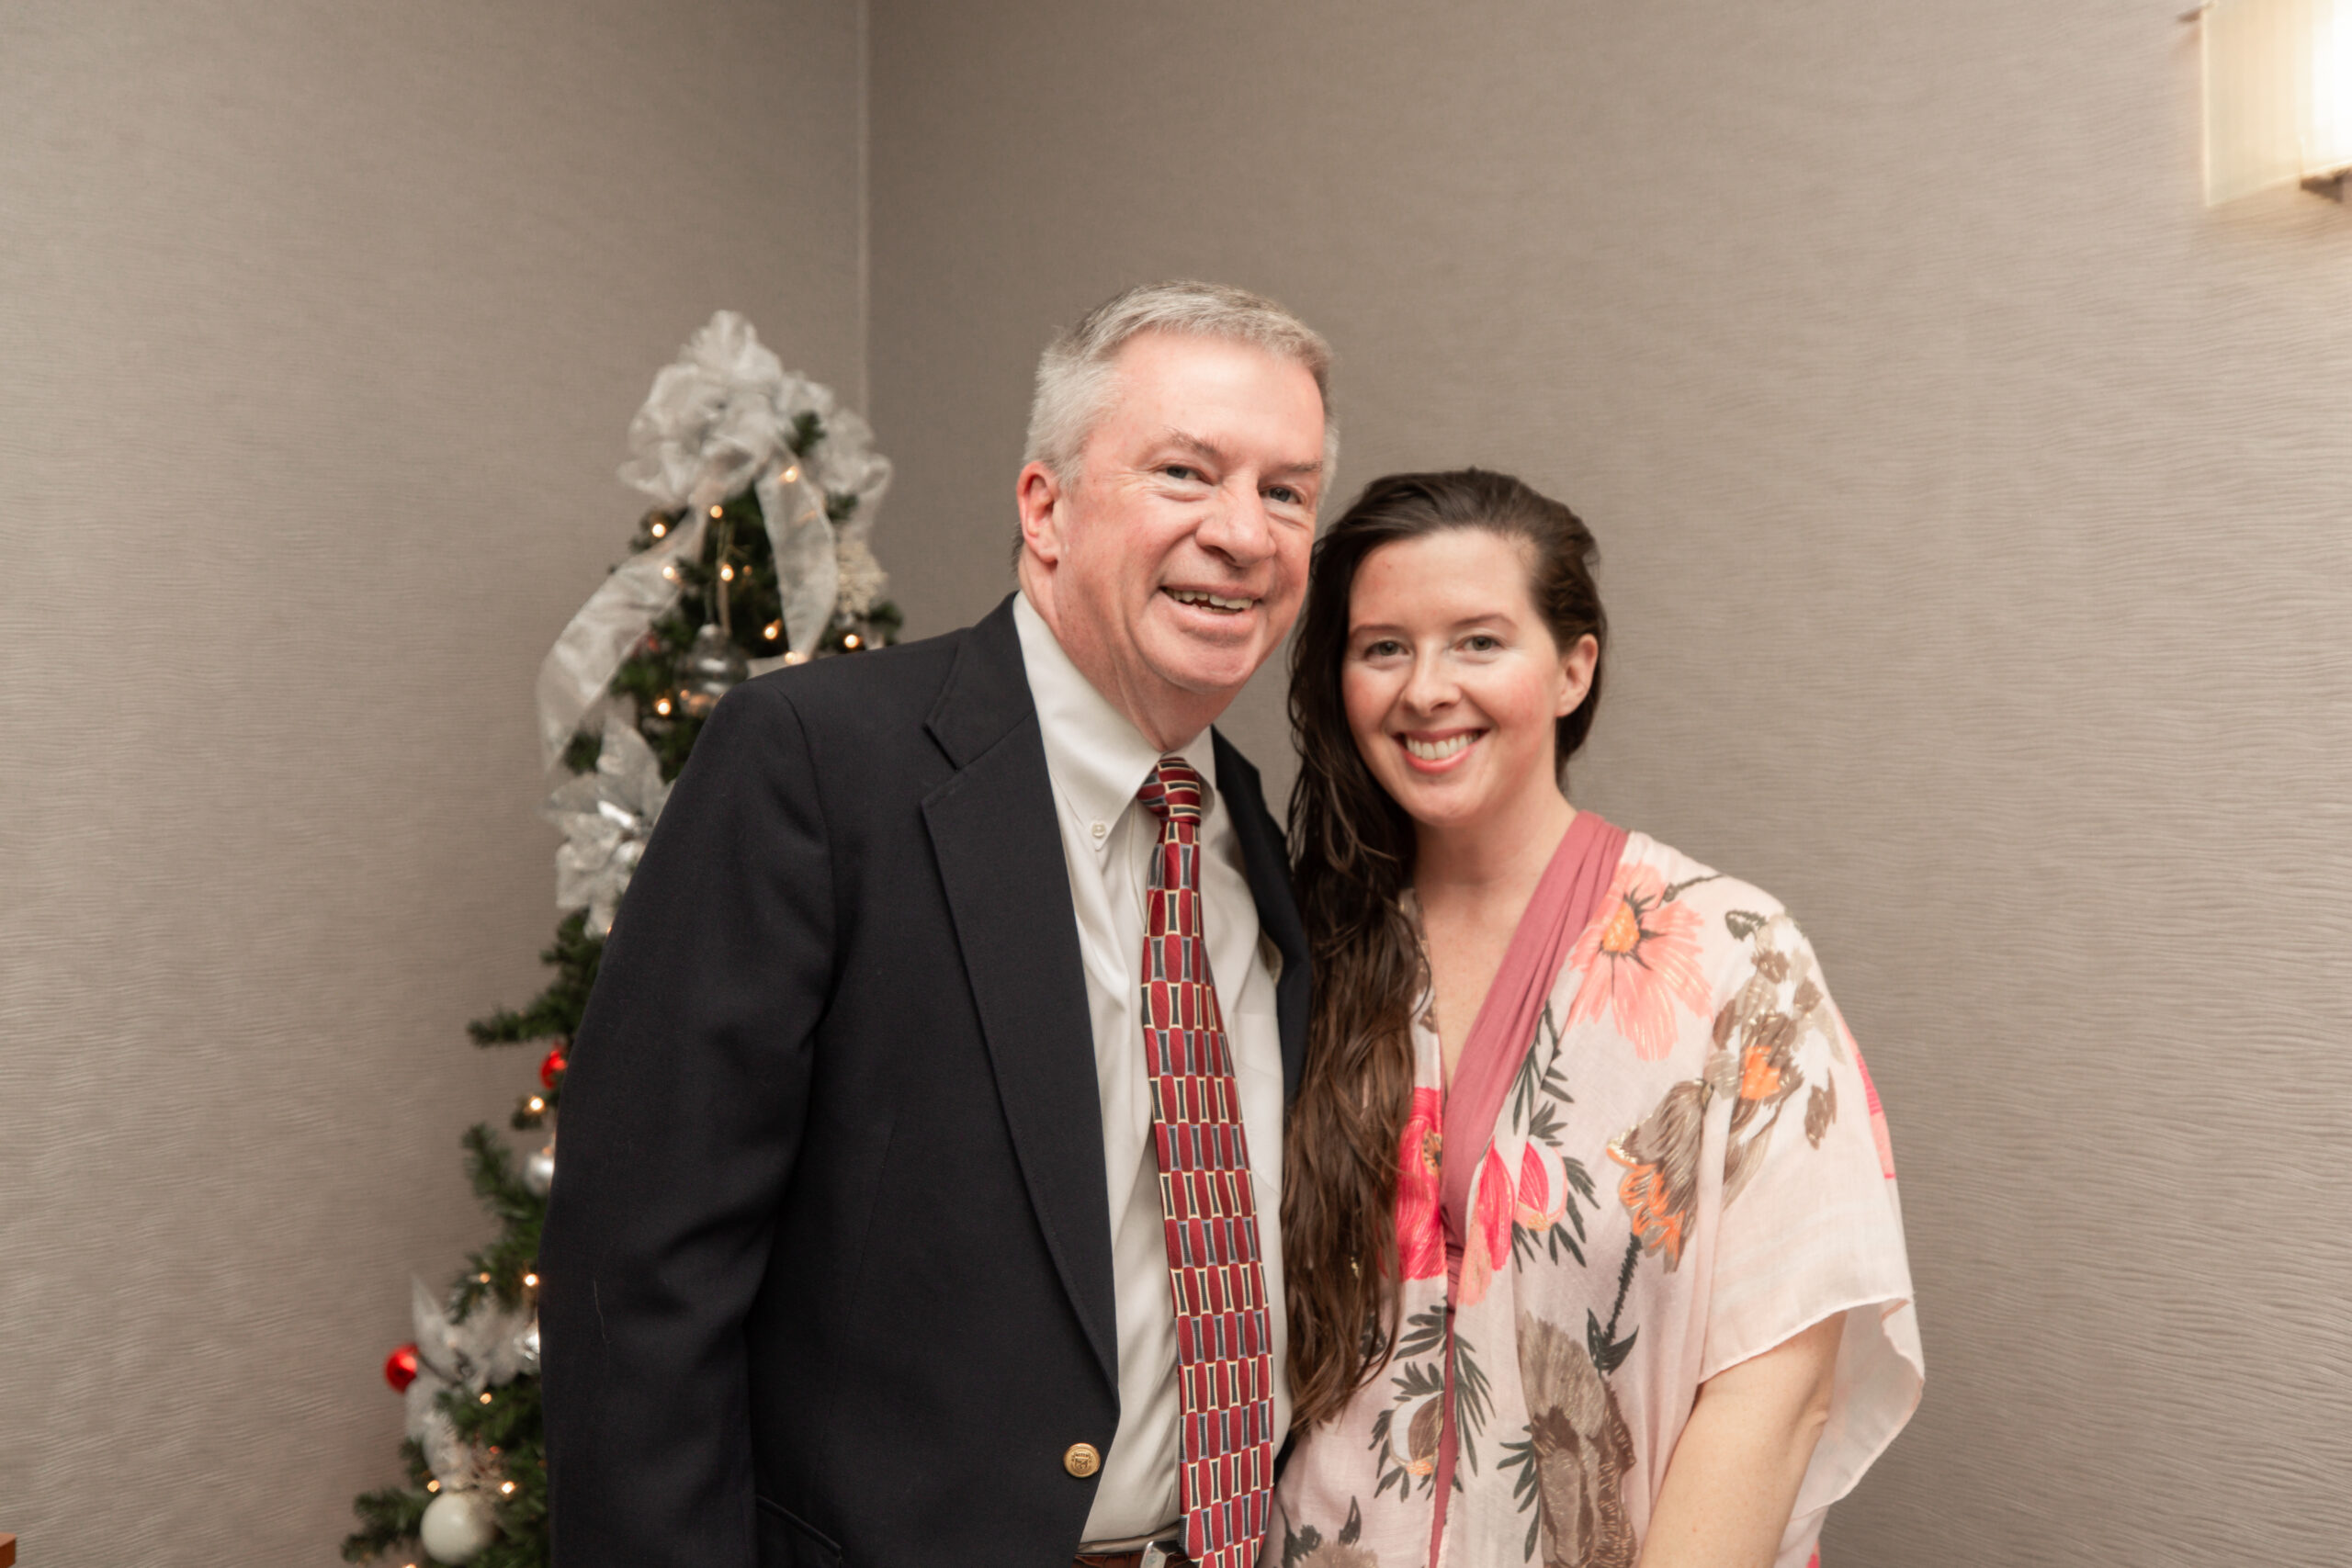 Broker-In-Charge Jim Parker and Marketing Director Megan Parker embracing the Christmas spirit